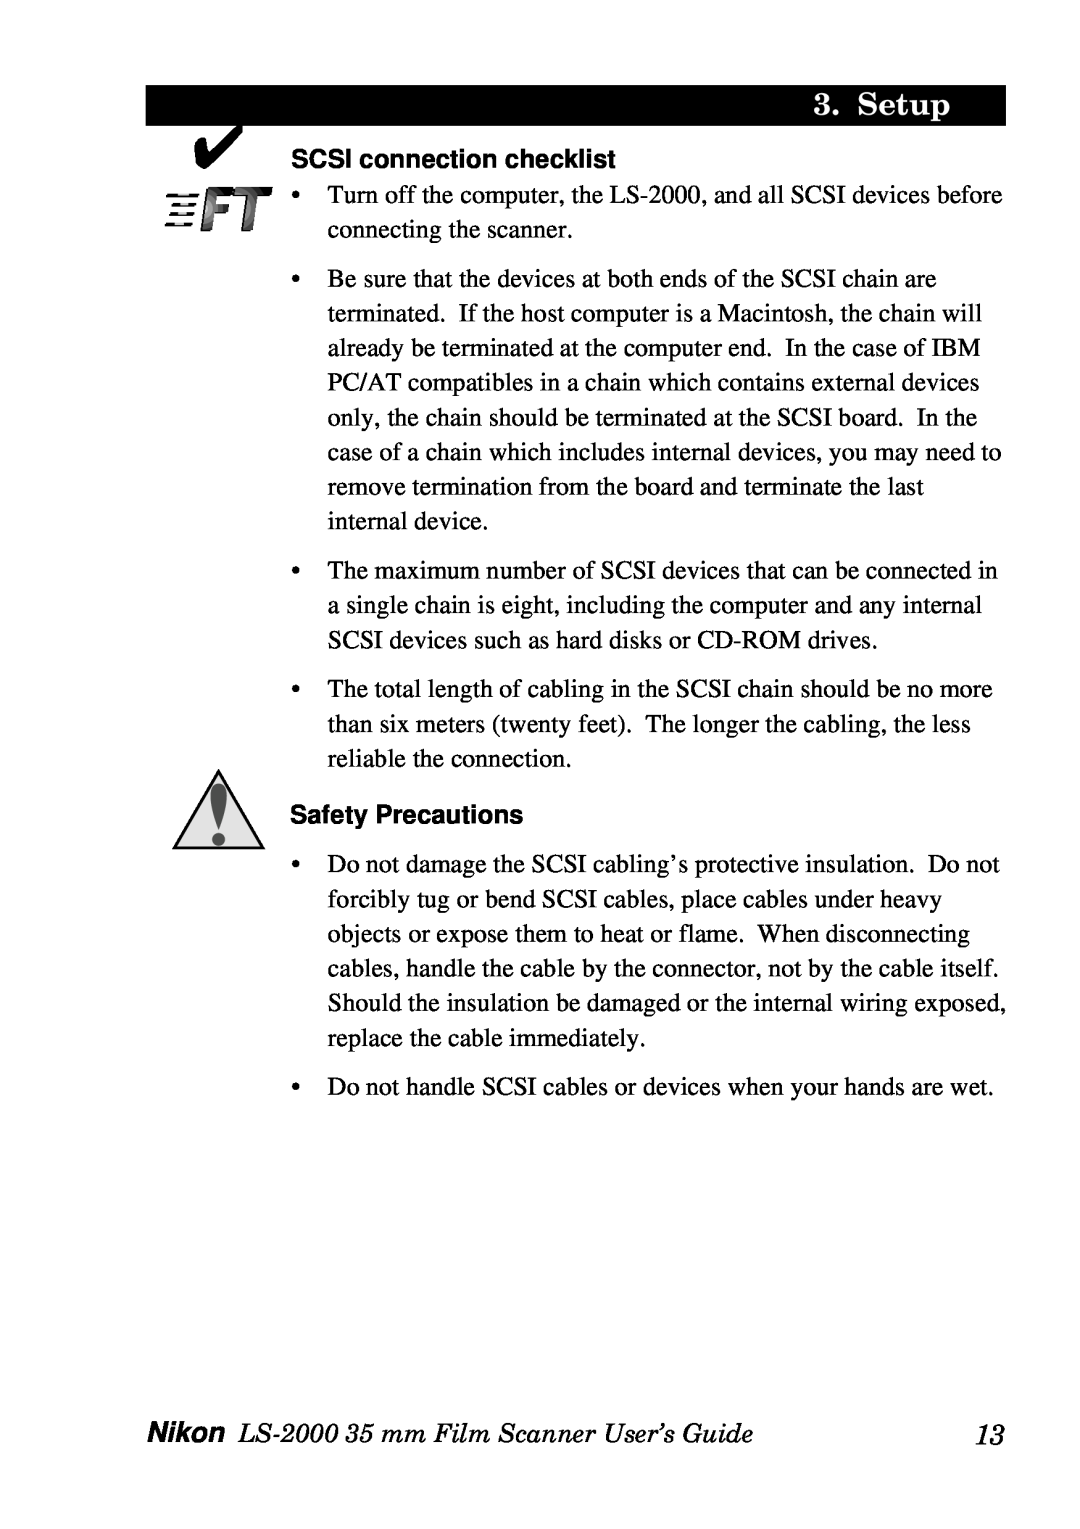 Nikon LS-2000 manual SCSI connection checklist, Setup, Safety Precautions 